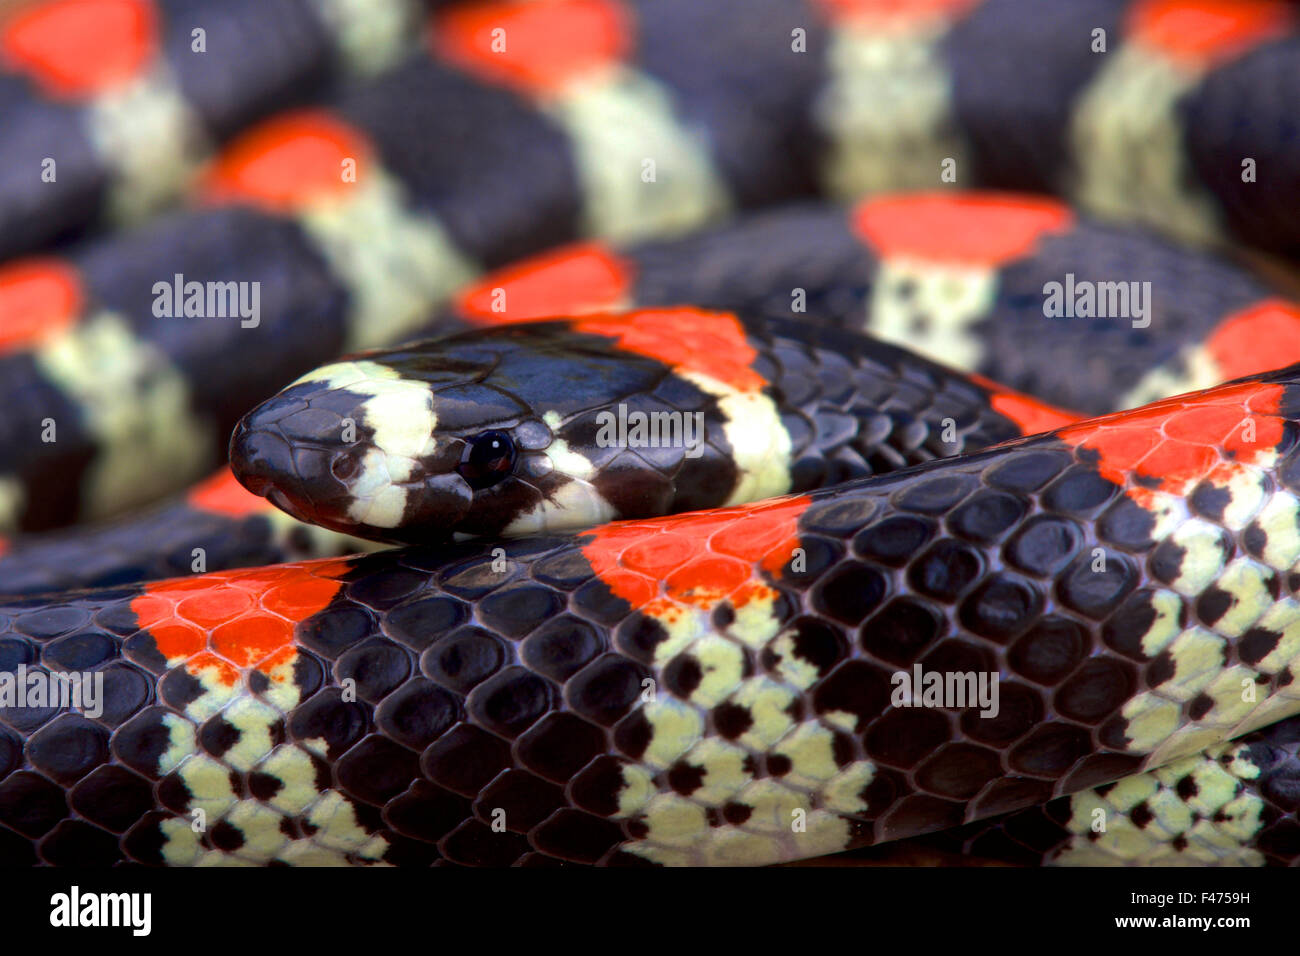 Black-banded Tausendfüßler Essen Schlange (Scolecophis Atrocinctus) Stockfoto